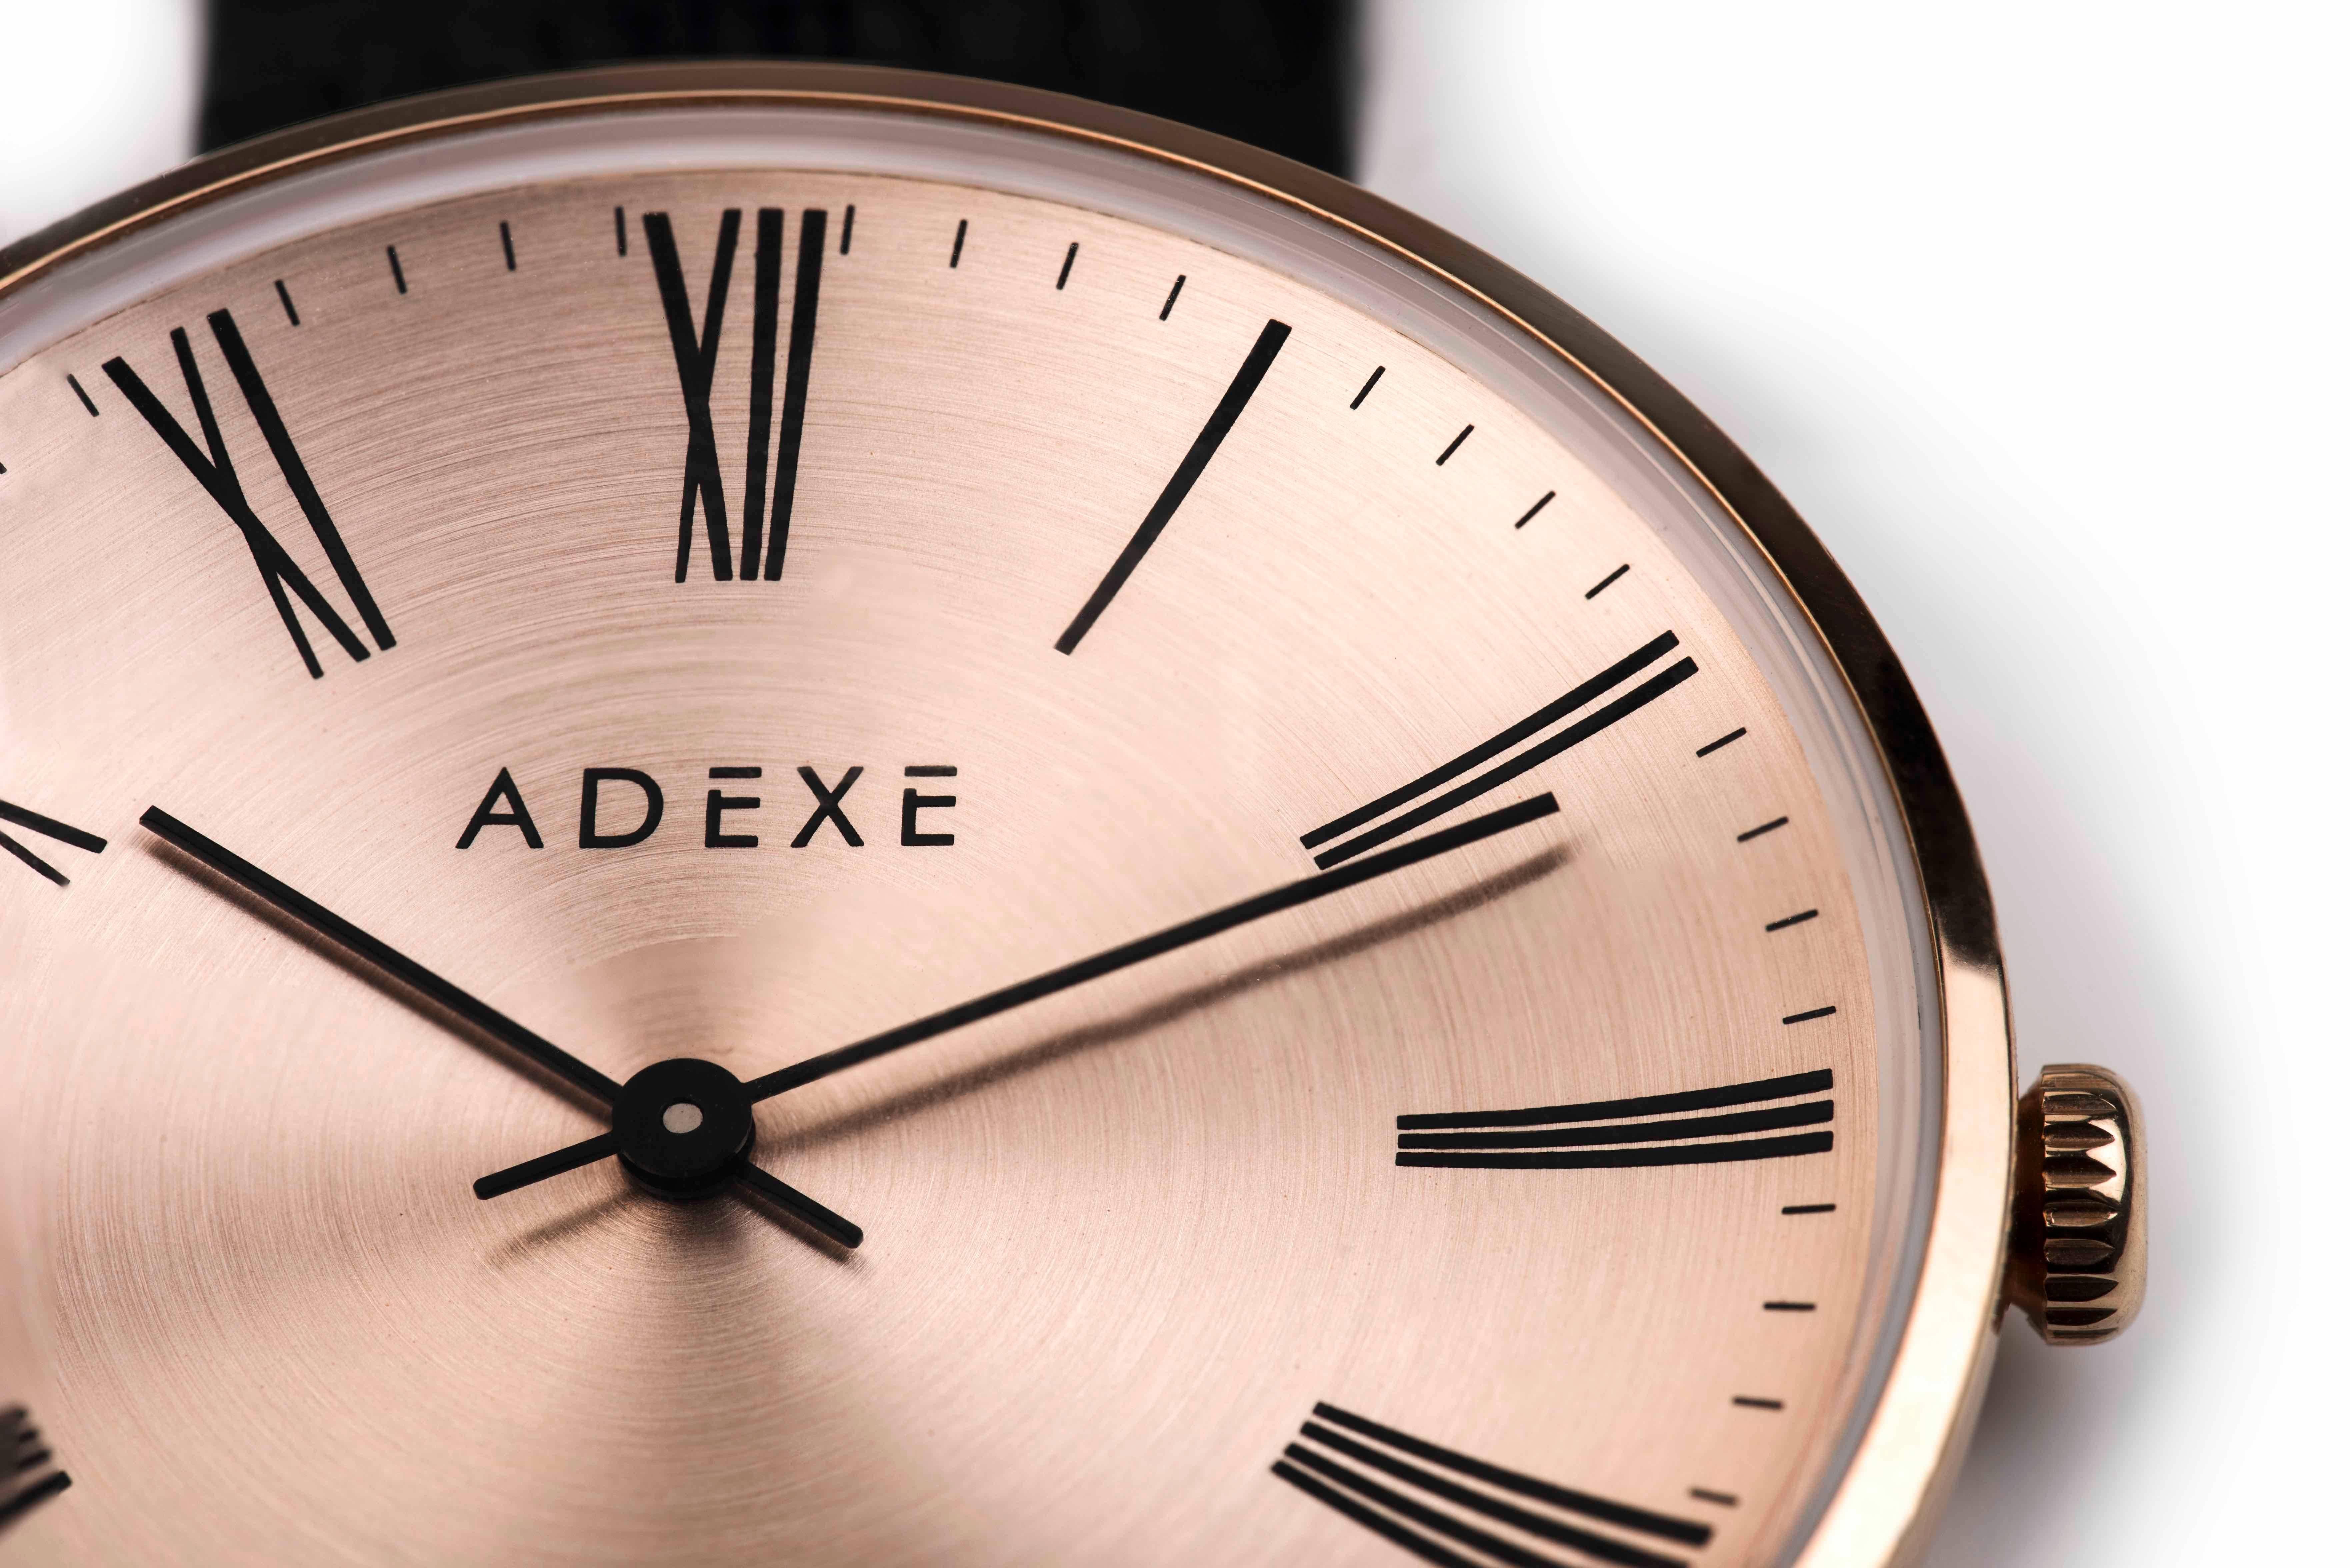 Contemporain ADEXE Watches Montre de designer Timeless en cuir véritable italien Sistine noir et or rose en vente